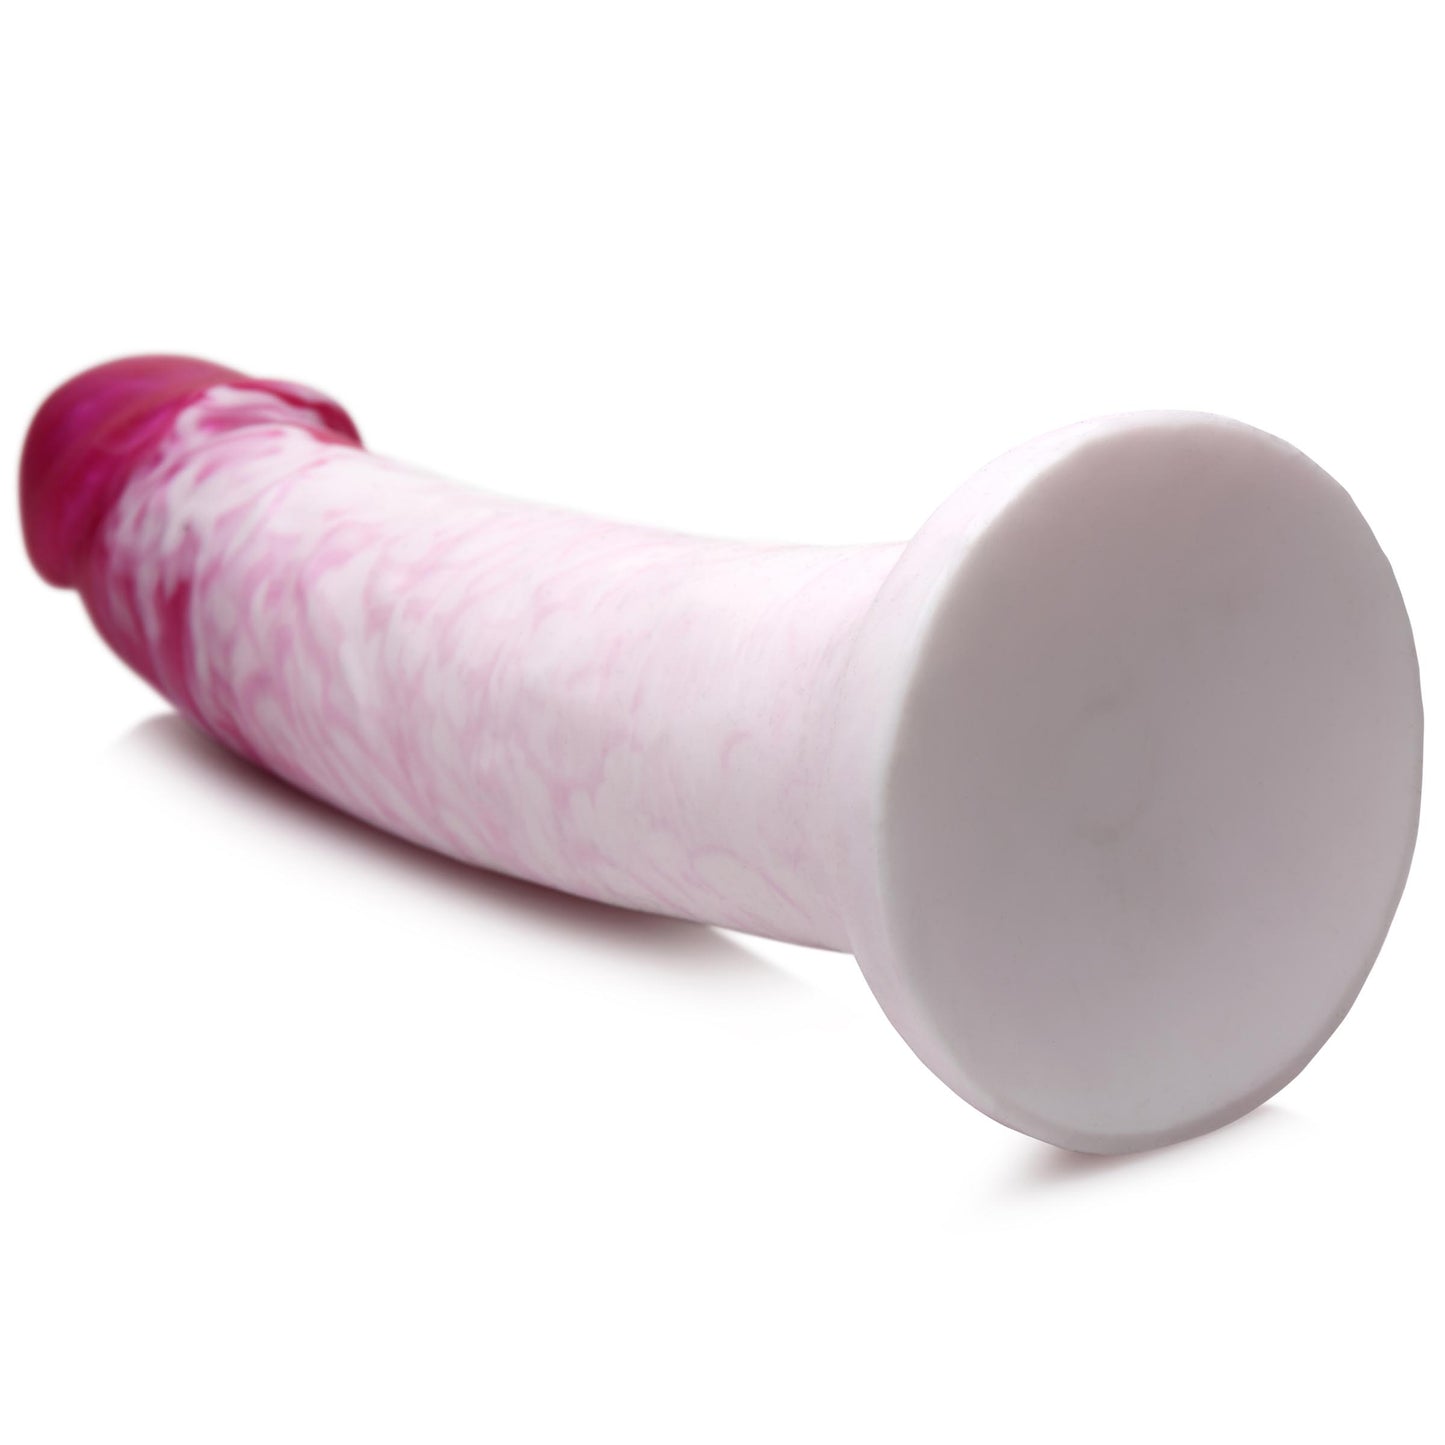 Swirl Realistic Silicone Dildo - Pink - UABDSM